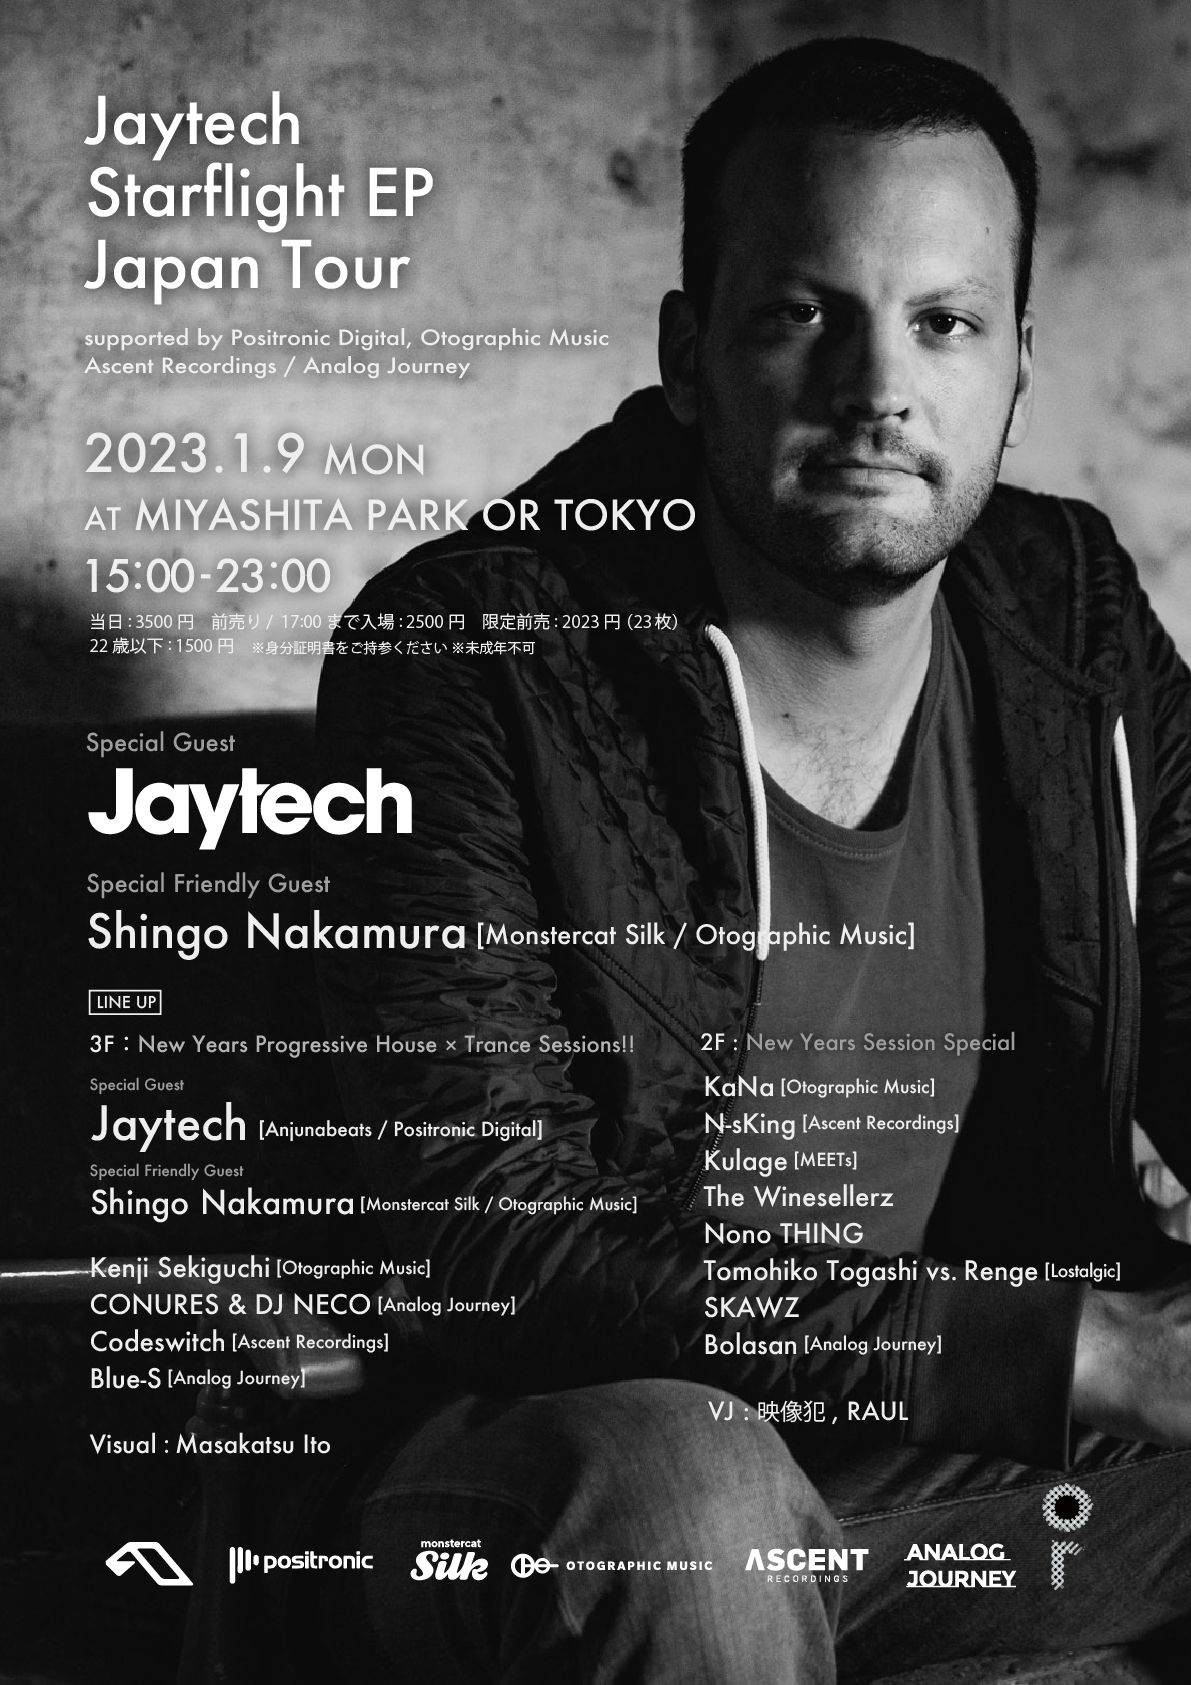 Jaytech 'Starflight EP' Japan Tour - Página frontal